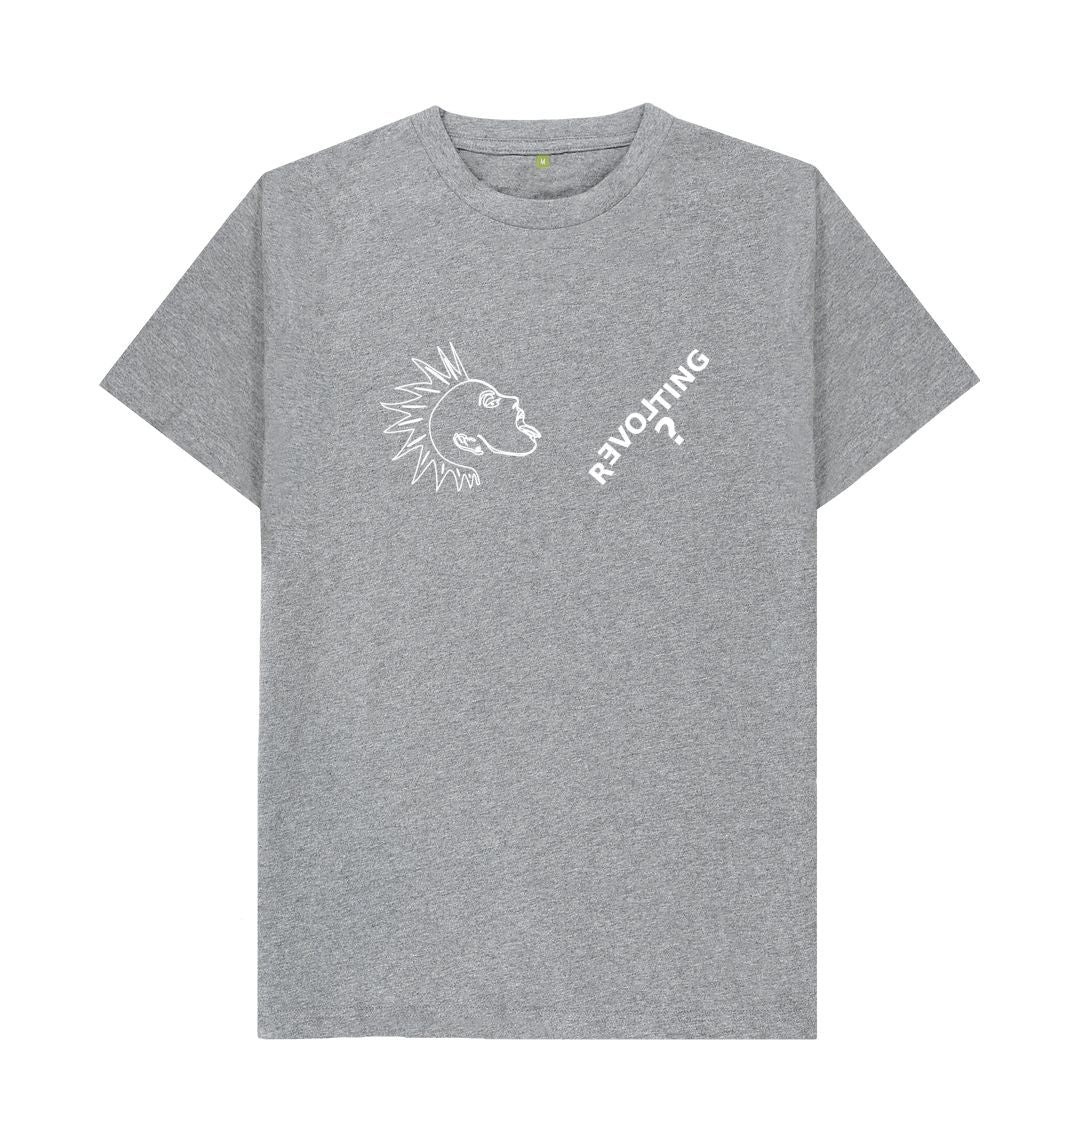 Athletic Grey Revolting unisex T-shirt